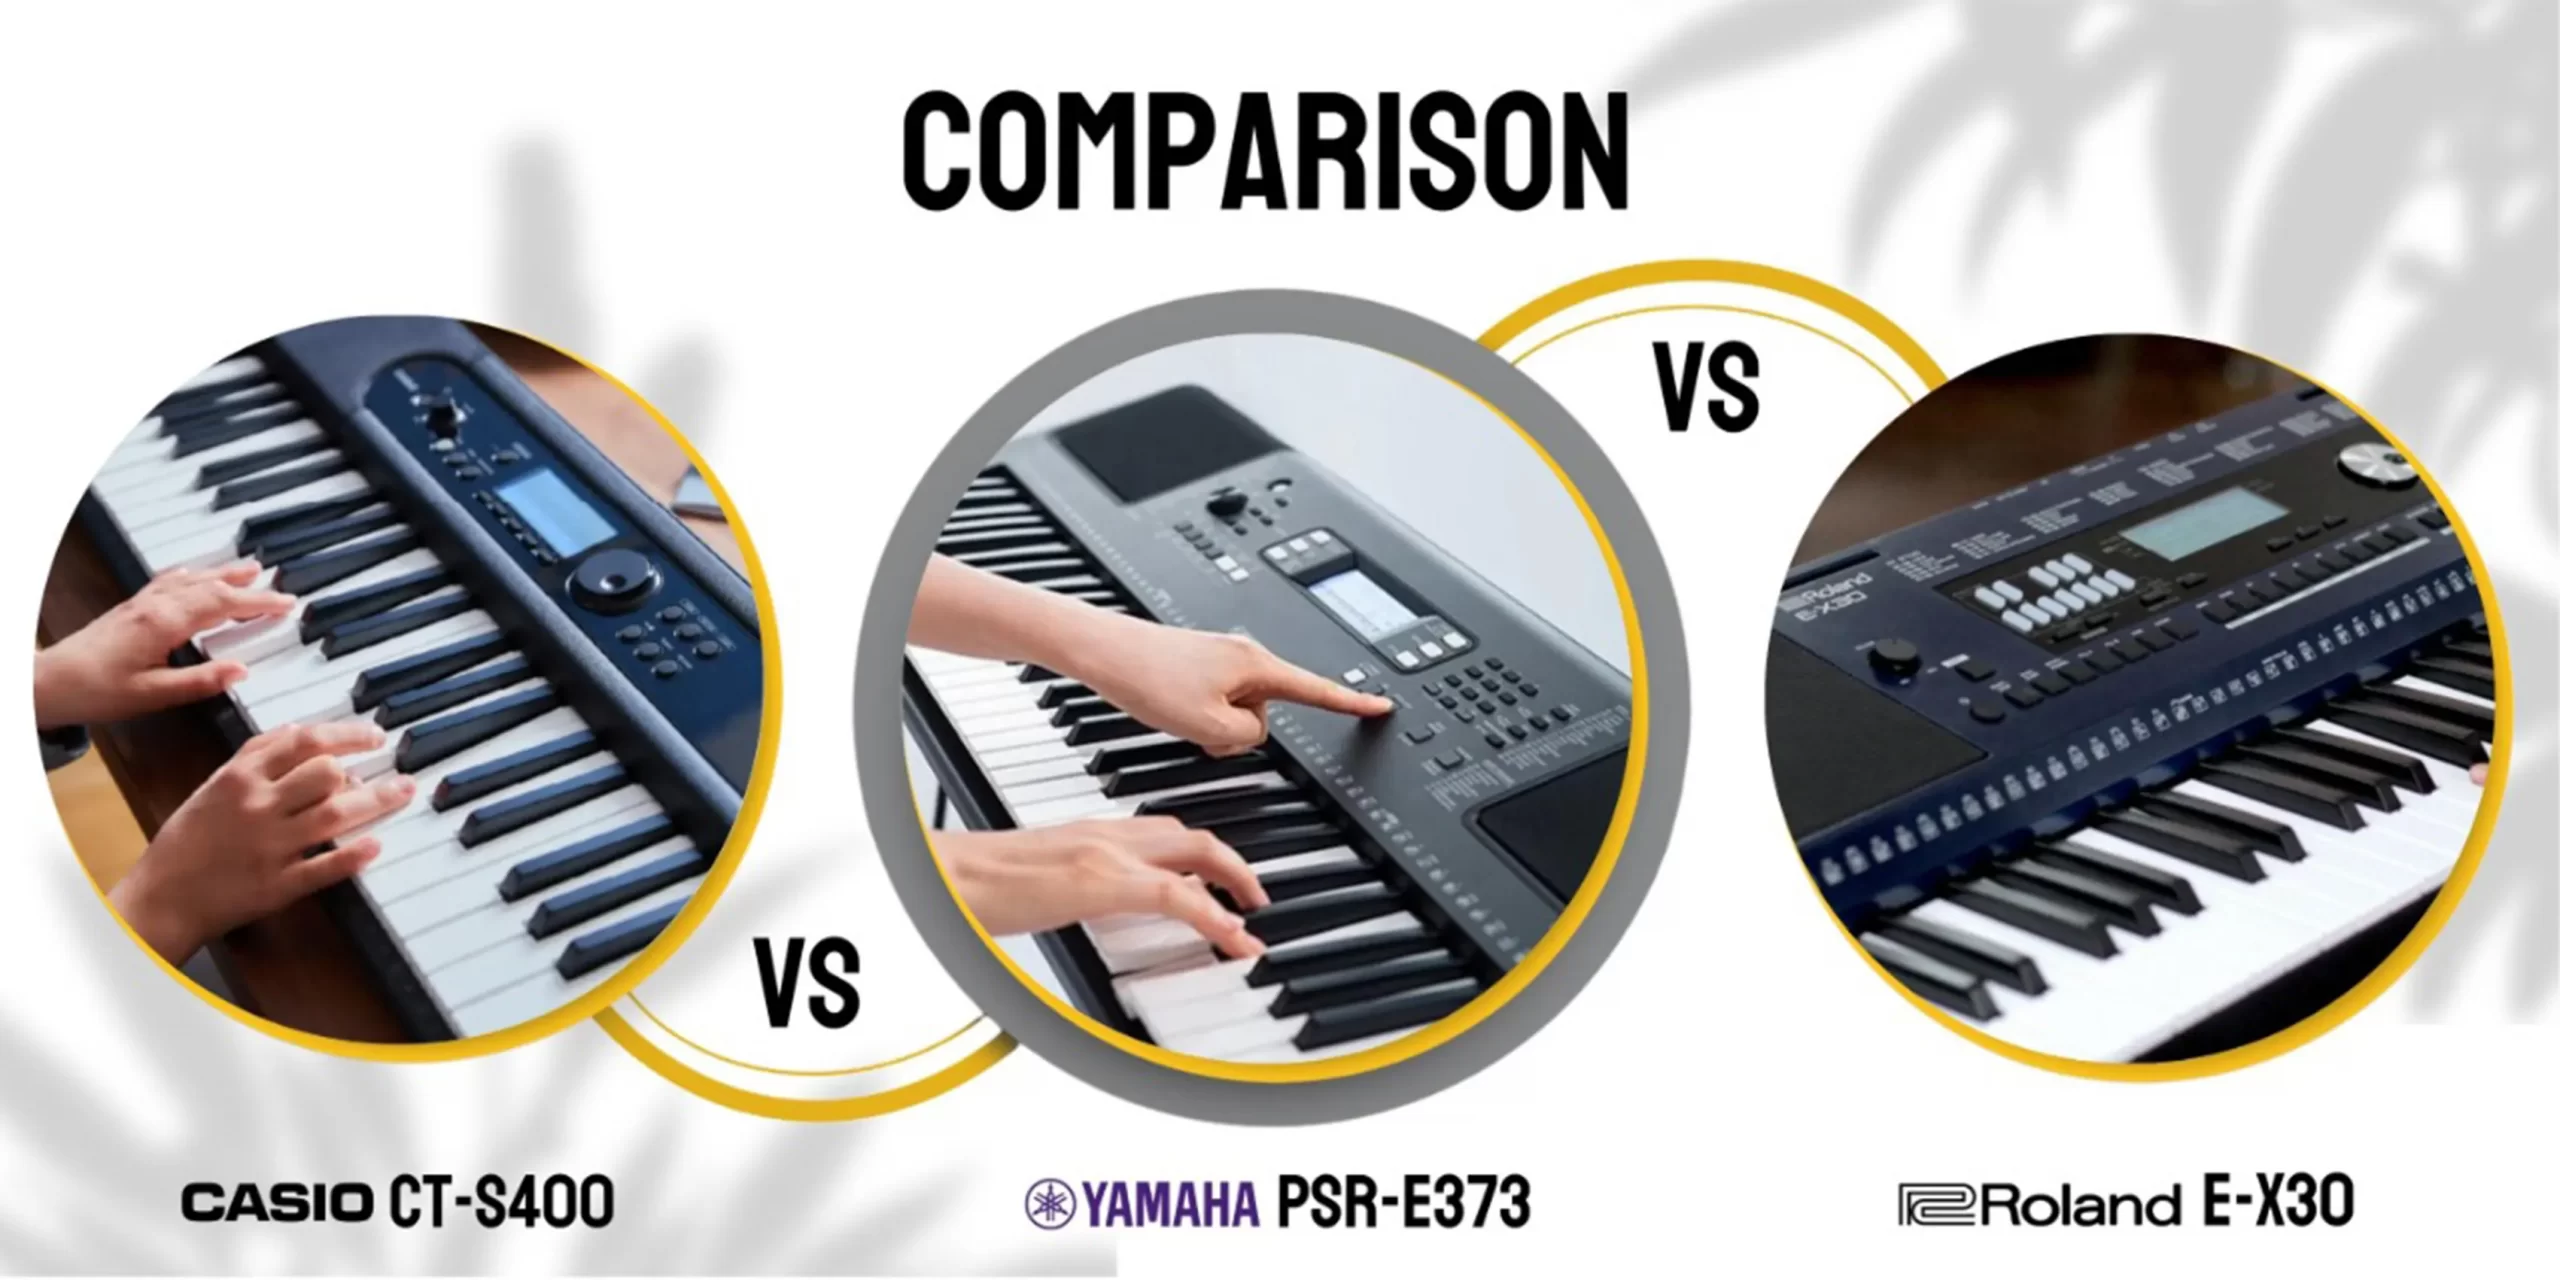 Casio CT-S400 vs Yamaha PSR-E373 vs Roland E-X30 keyboard comparison